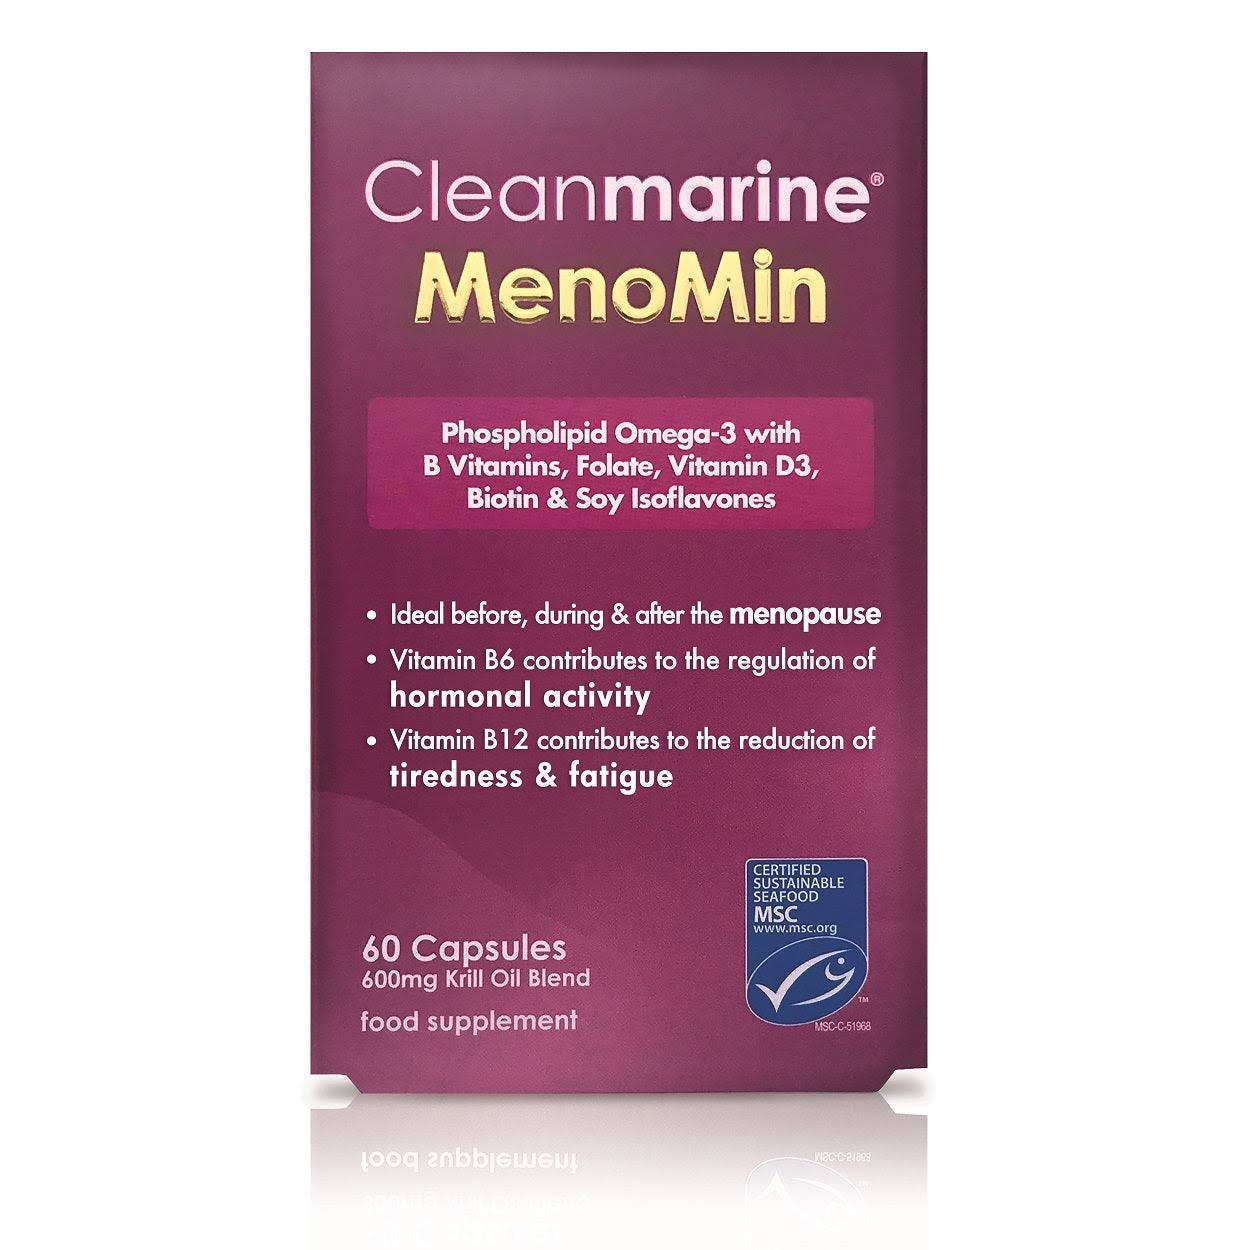 Cleanmarine Menomin for Women - 60